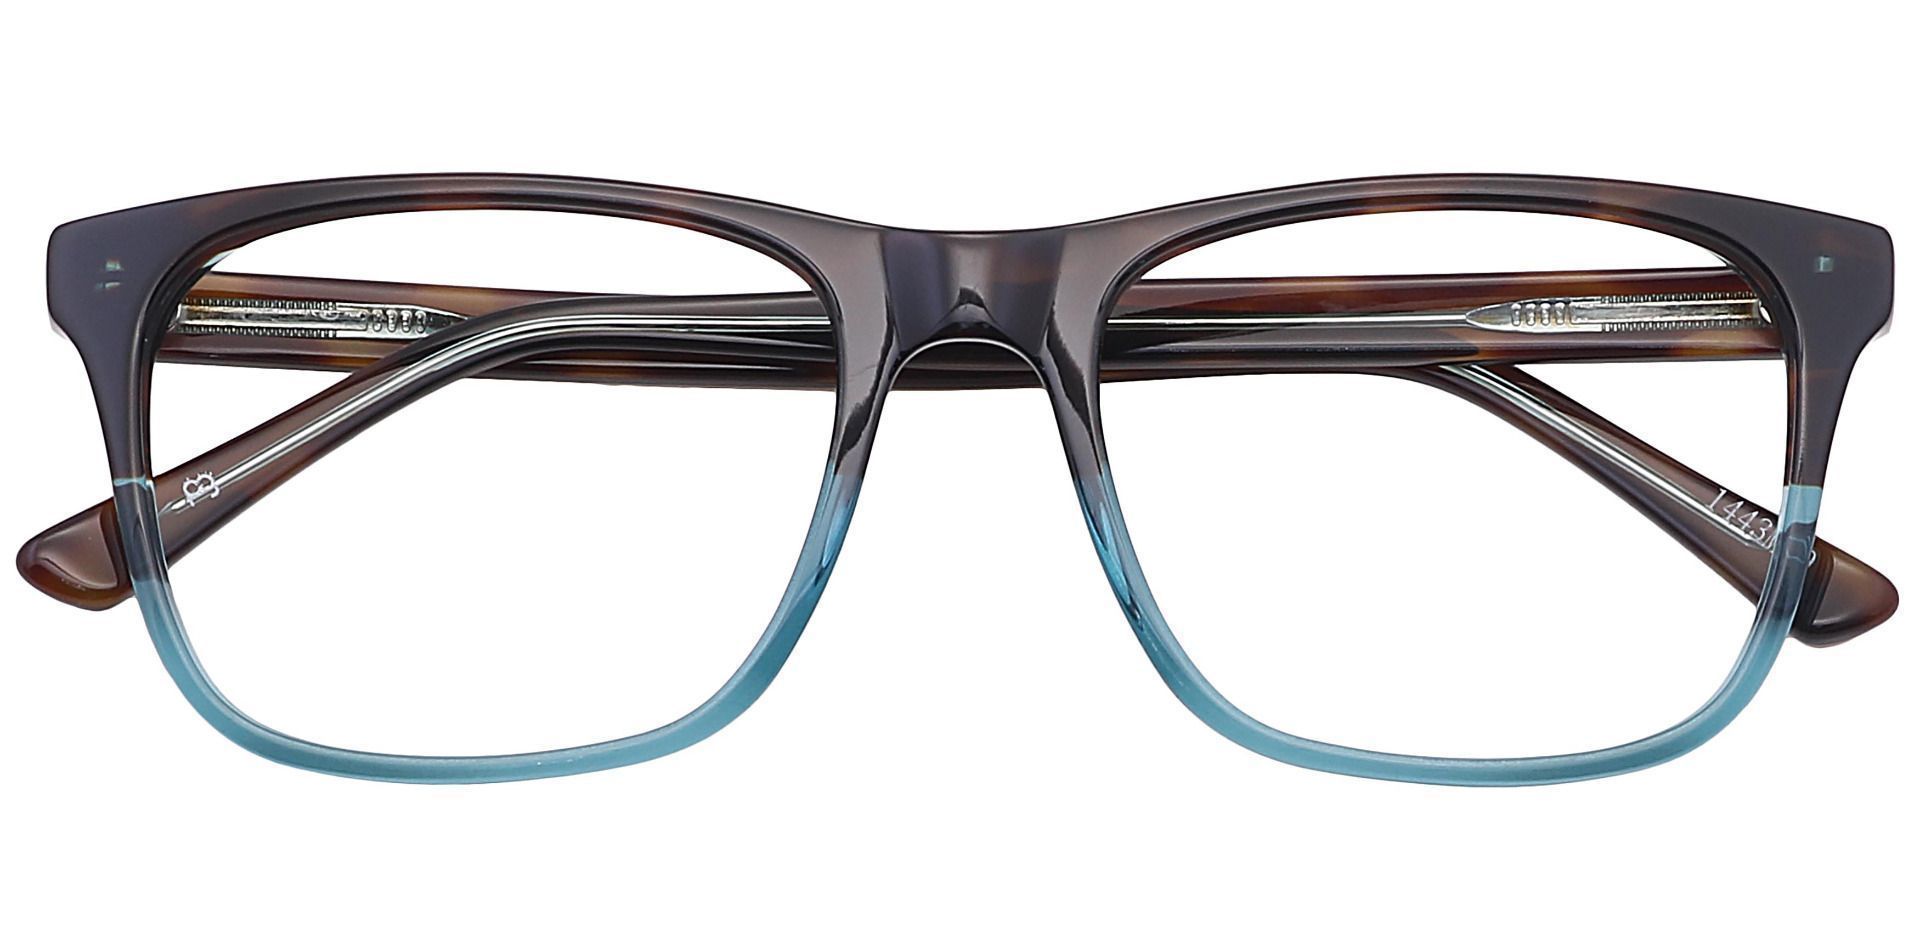 Cantina Square Eyeglasses Frame - Two